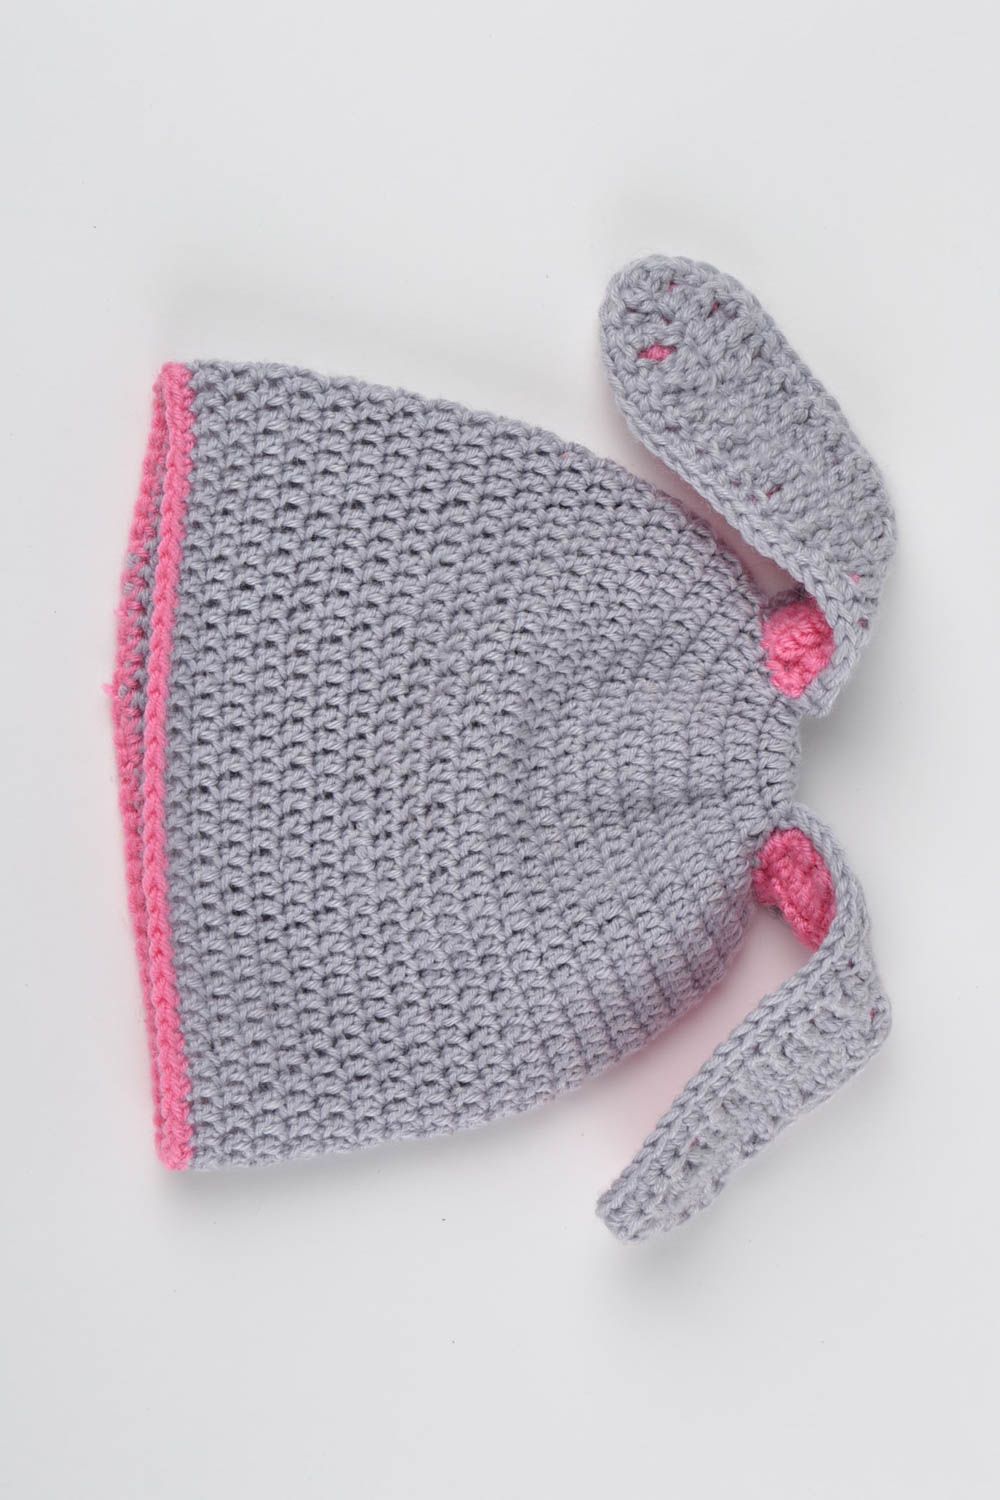 Handmade hat designer hat unusual hat gift for baby crochet hat grey hat photo 1